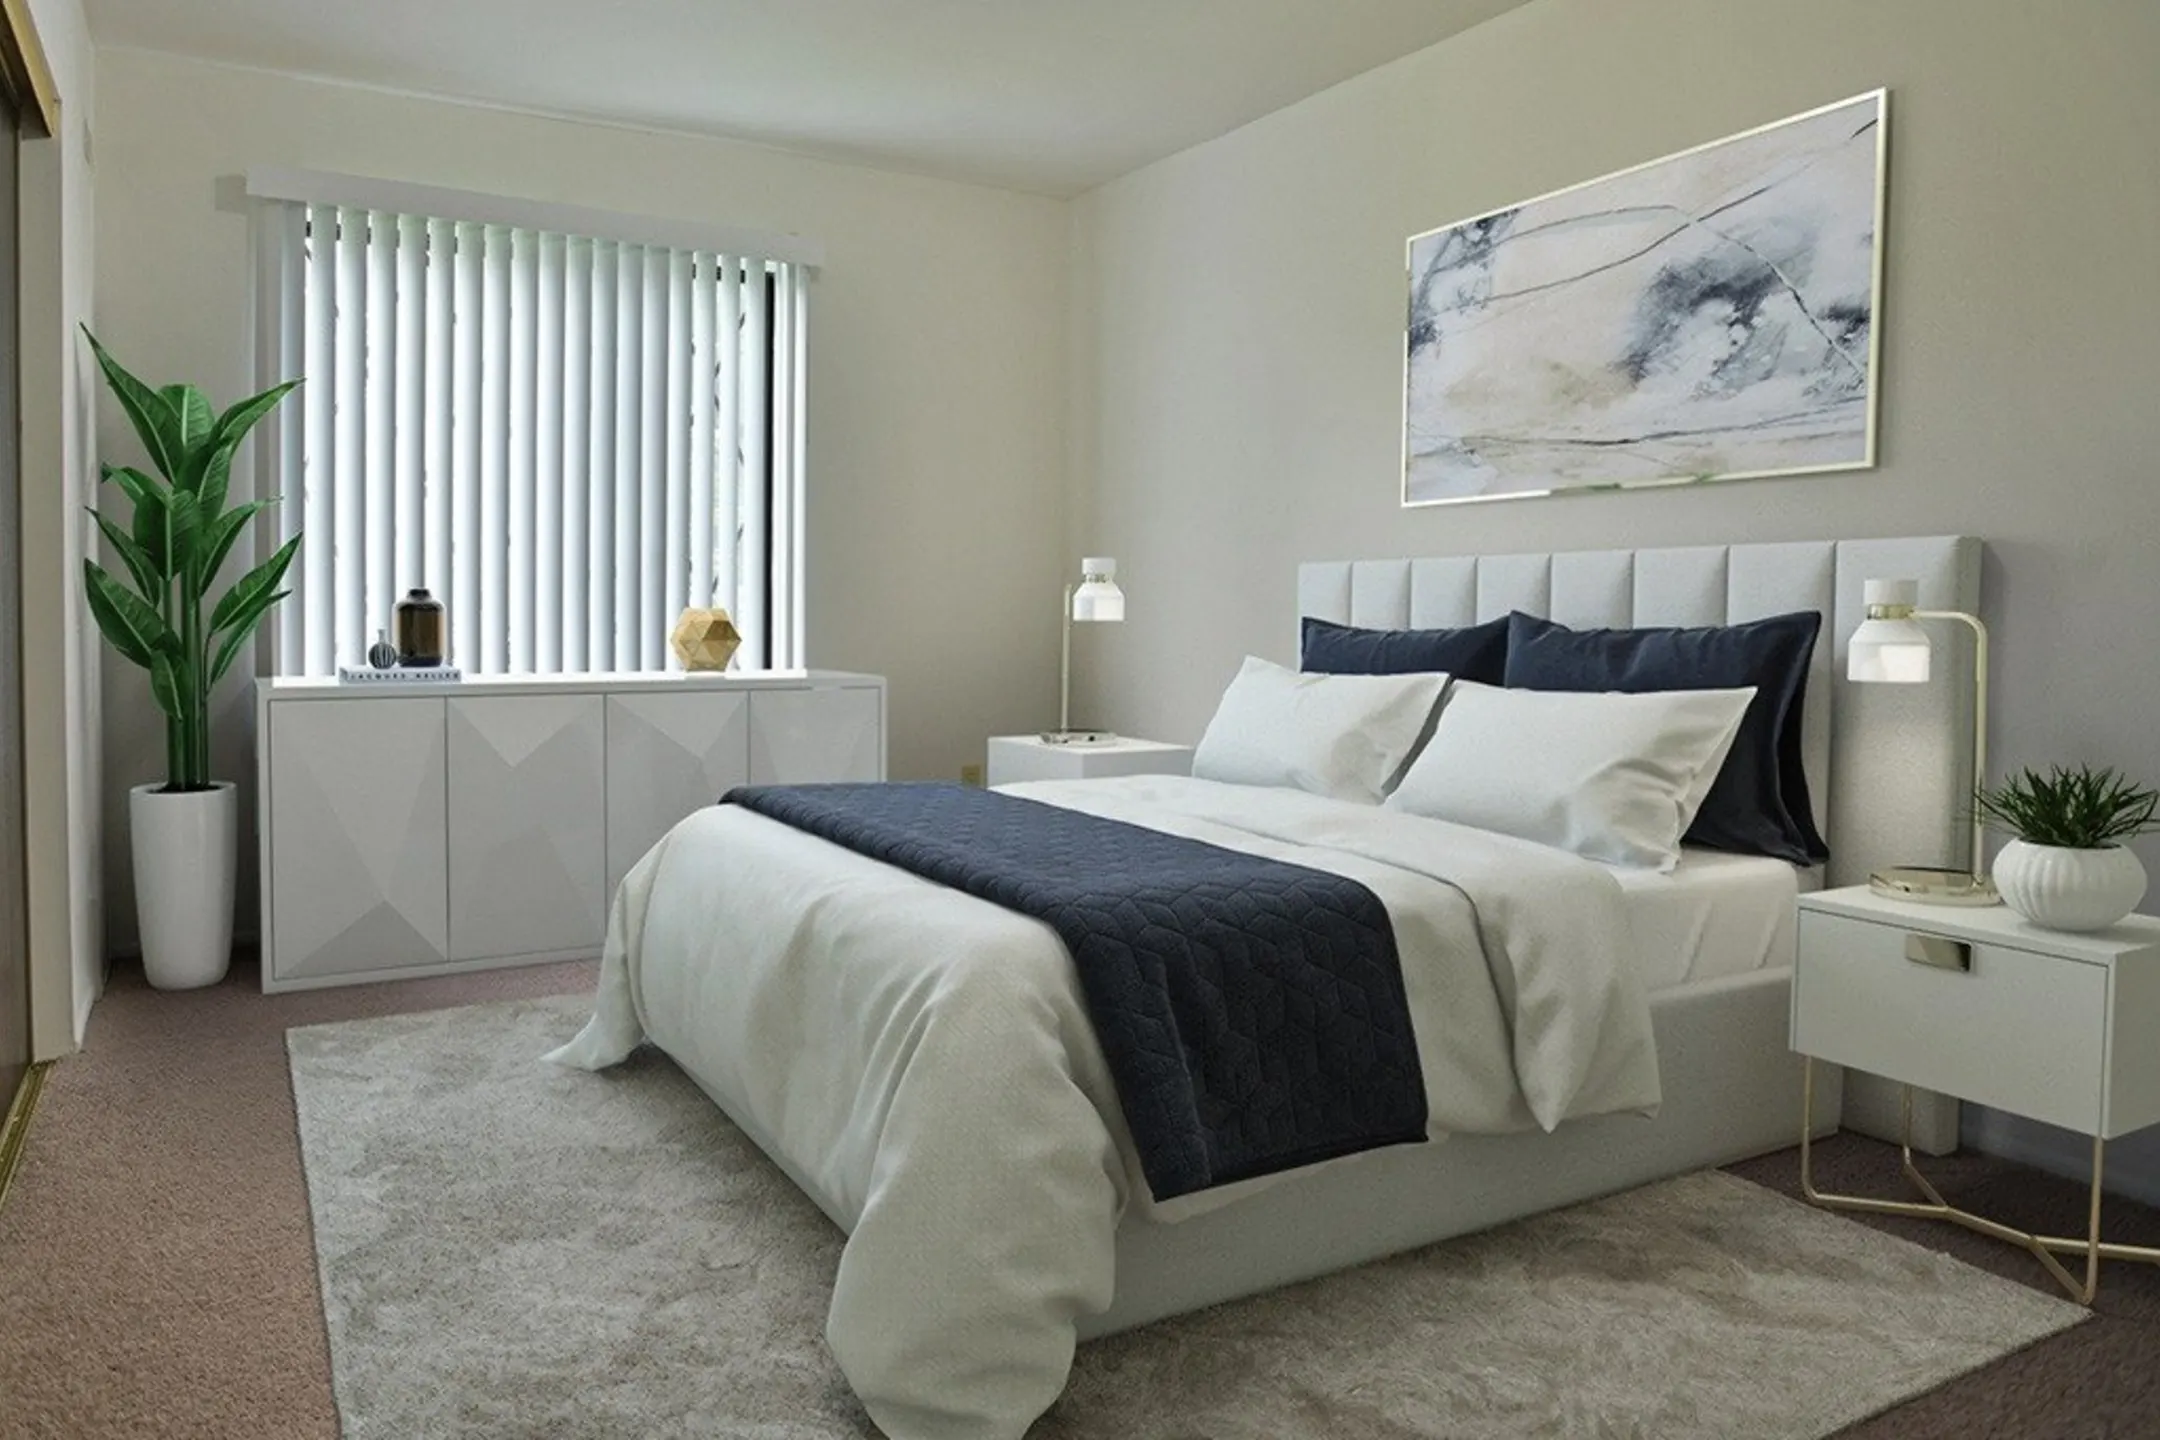 Bedroom - Charter Oaks Apartments - Davison, MI